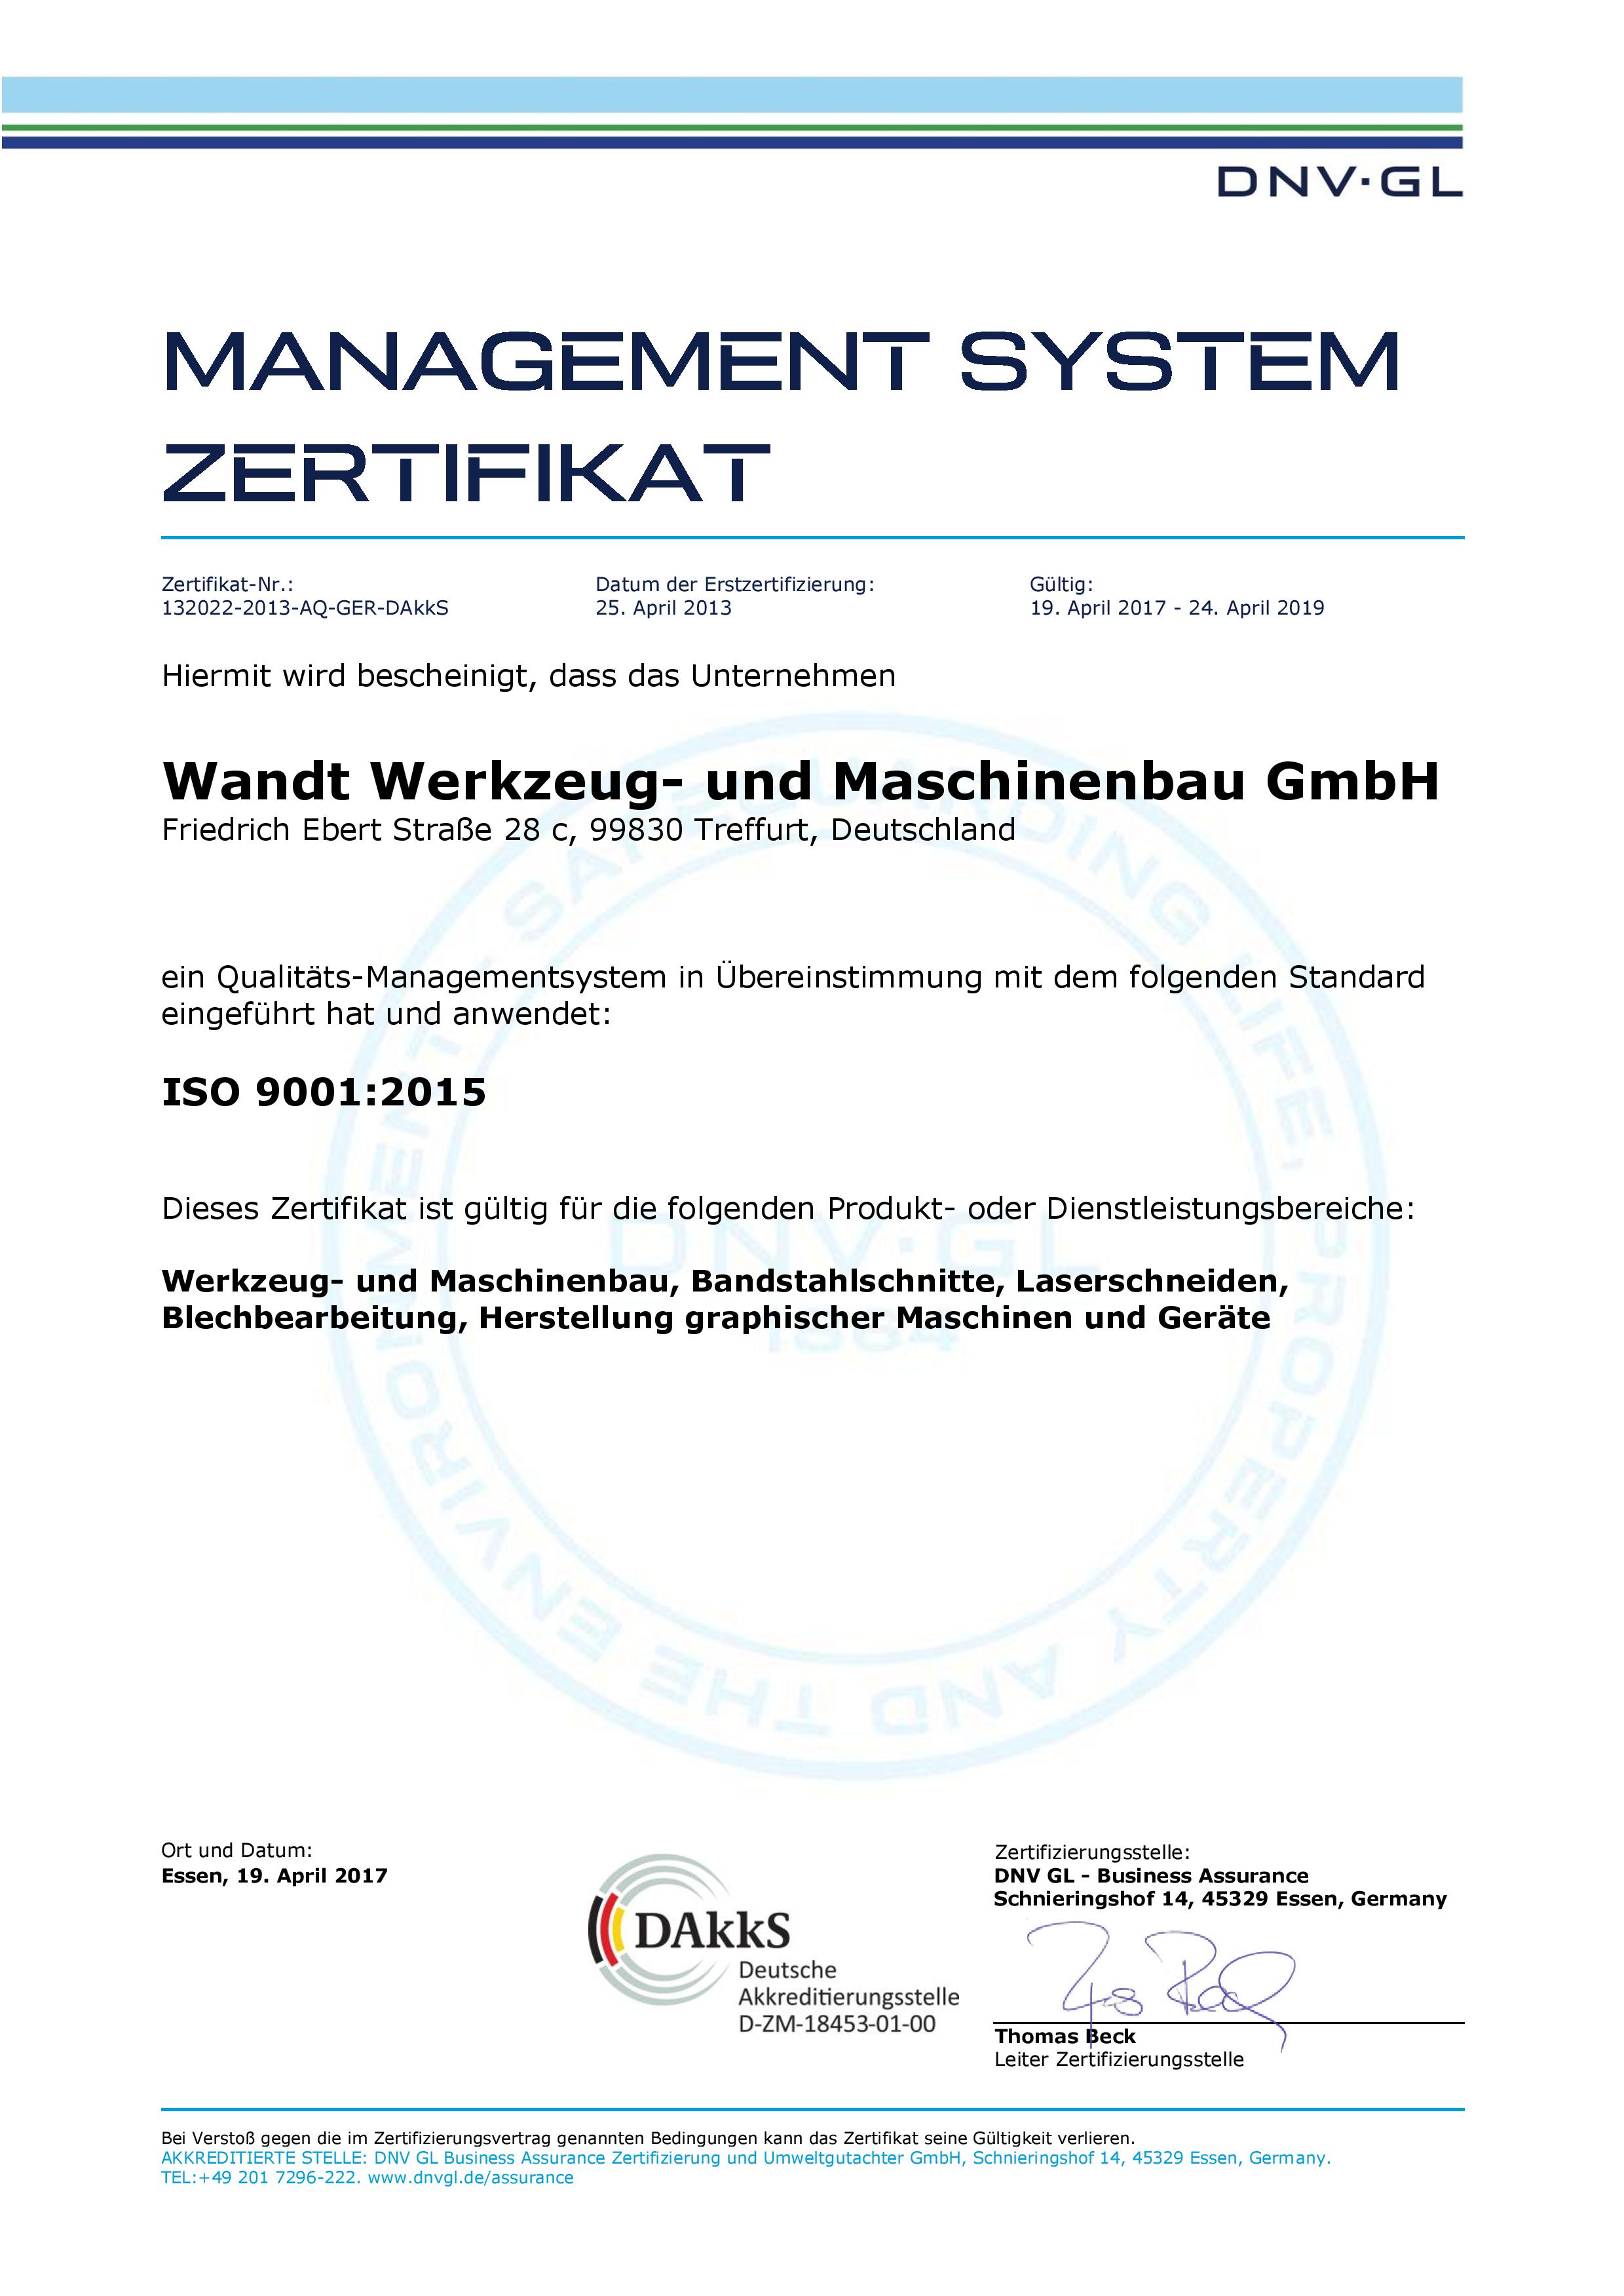 DIN EN ISO 9001:2015::Dieses Zertifikat gültig vom 19.04.2017 bis 24.04.2019